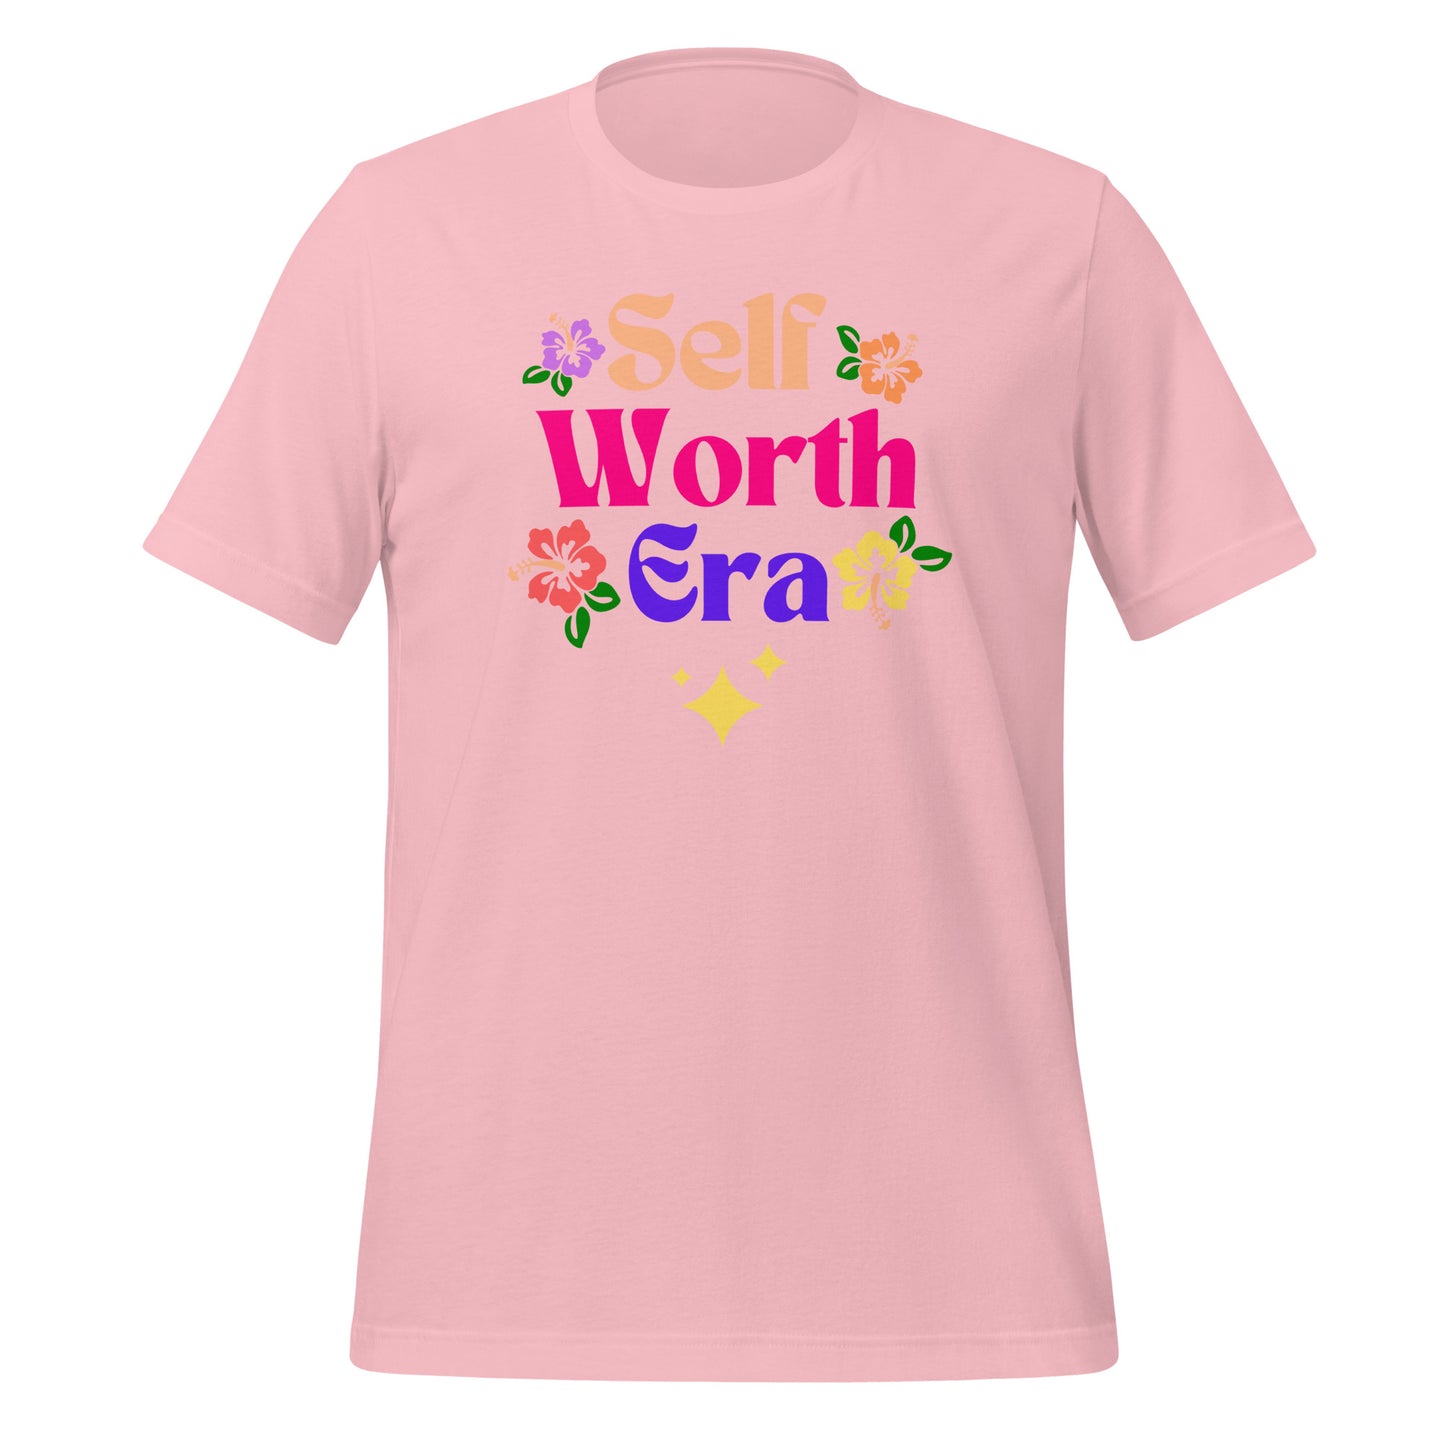 Self Worth T-shirt